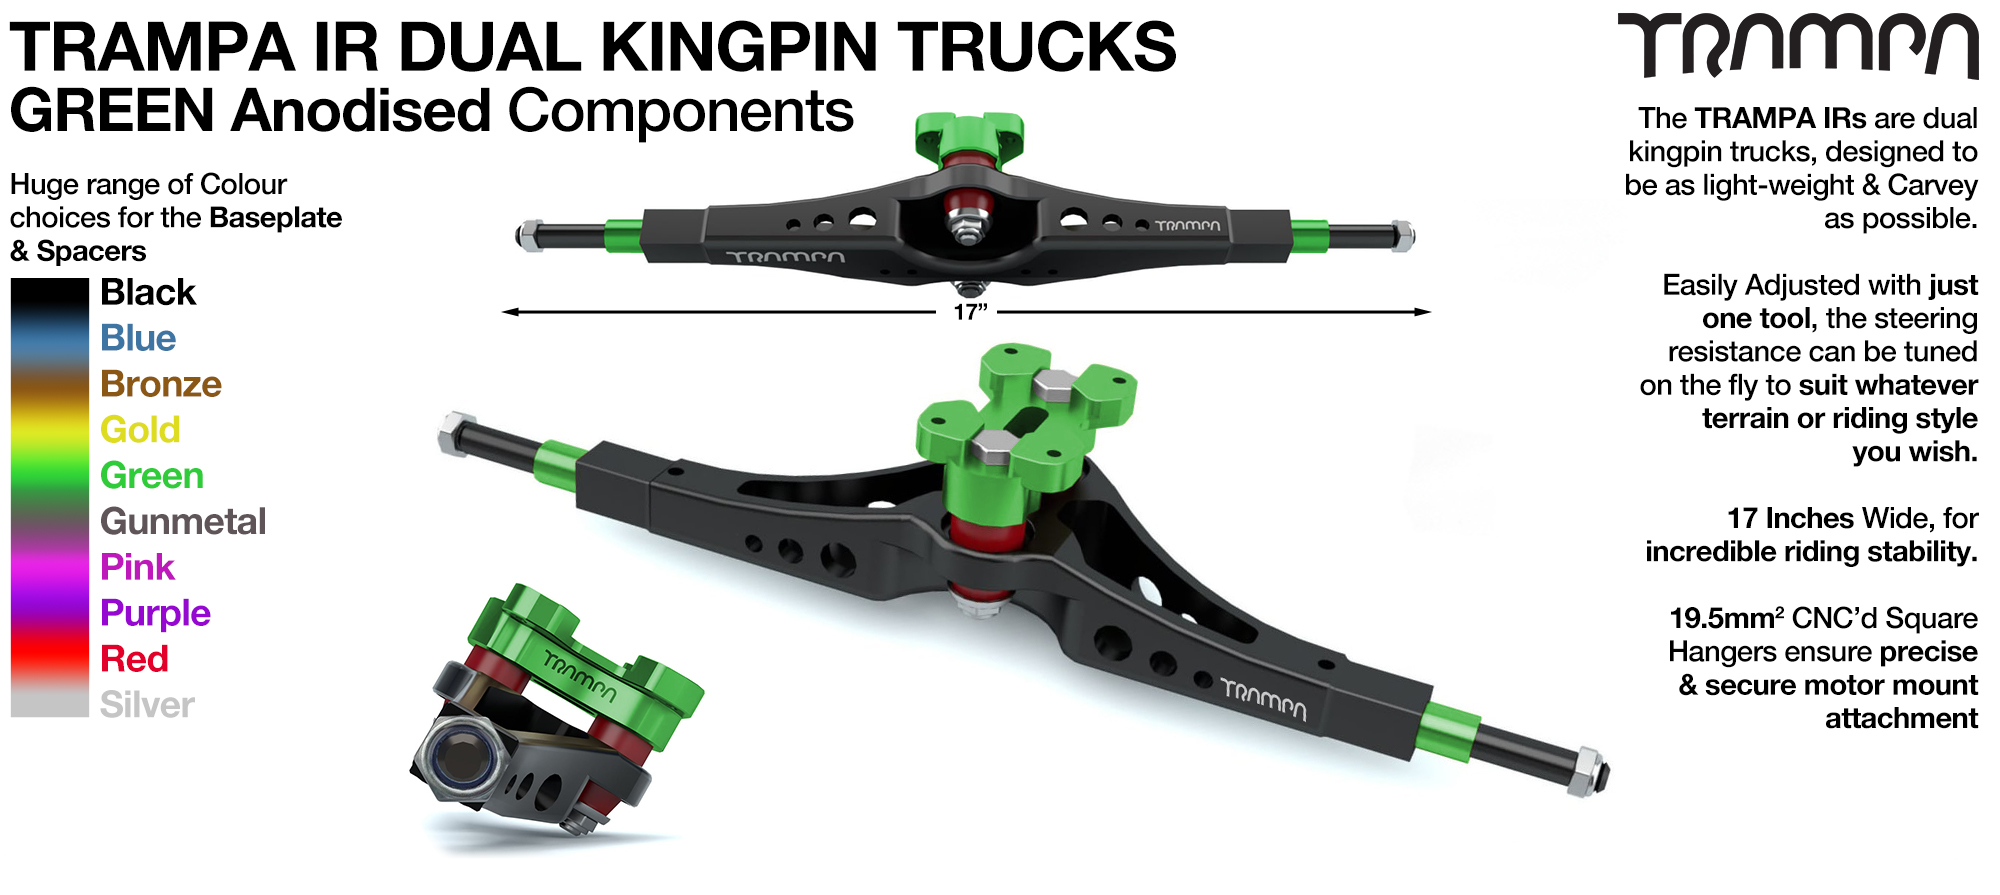 TRAMPA IR Double Kingpinned Skate Style Trucks fit every 19.1mm Motor Mount TRAMPA offers - GREEN